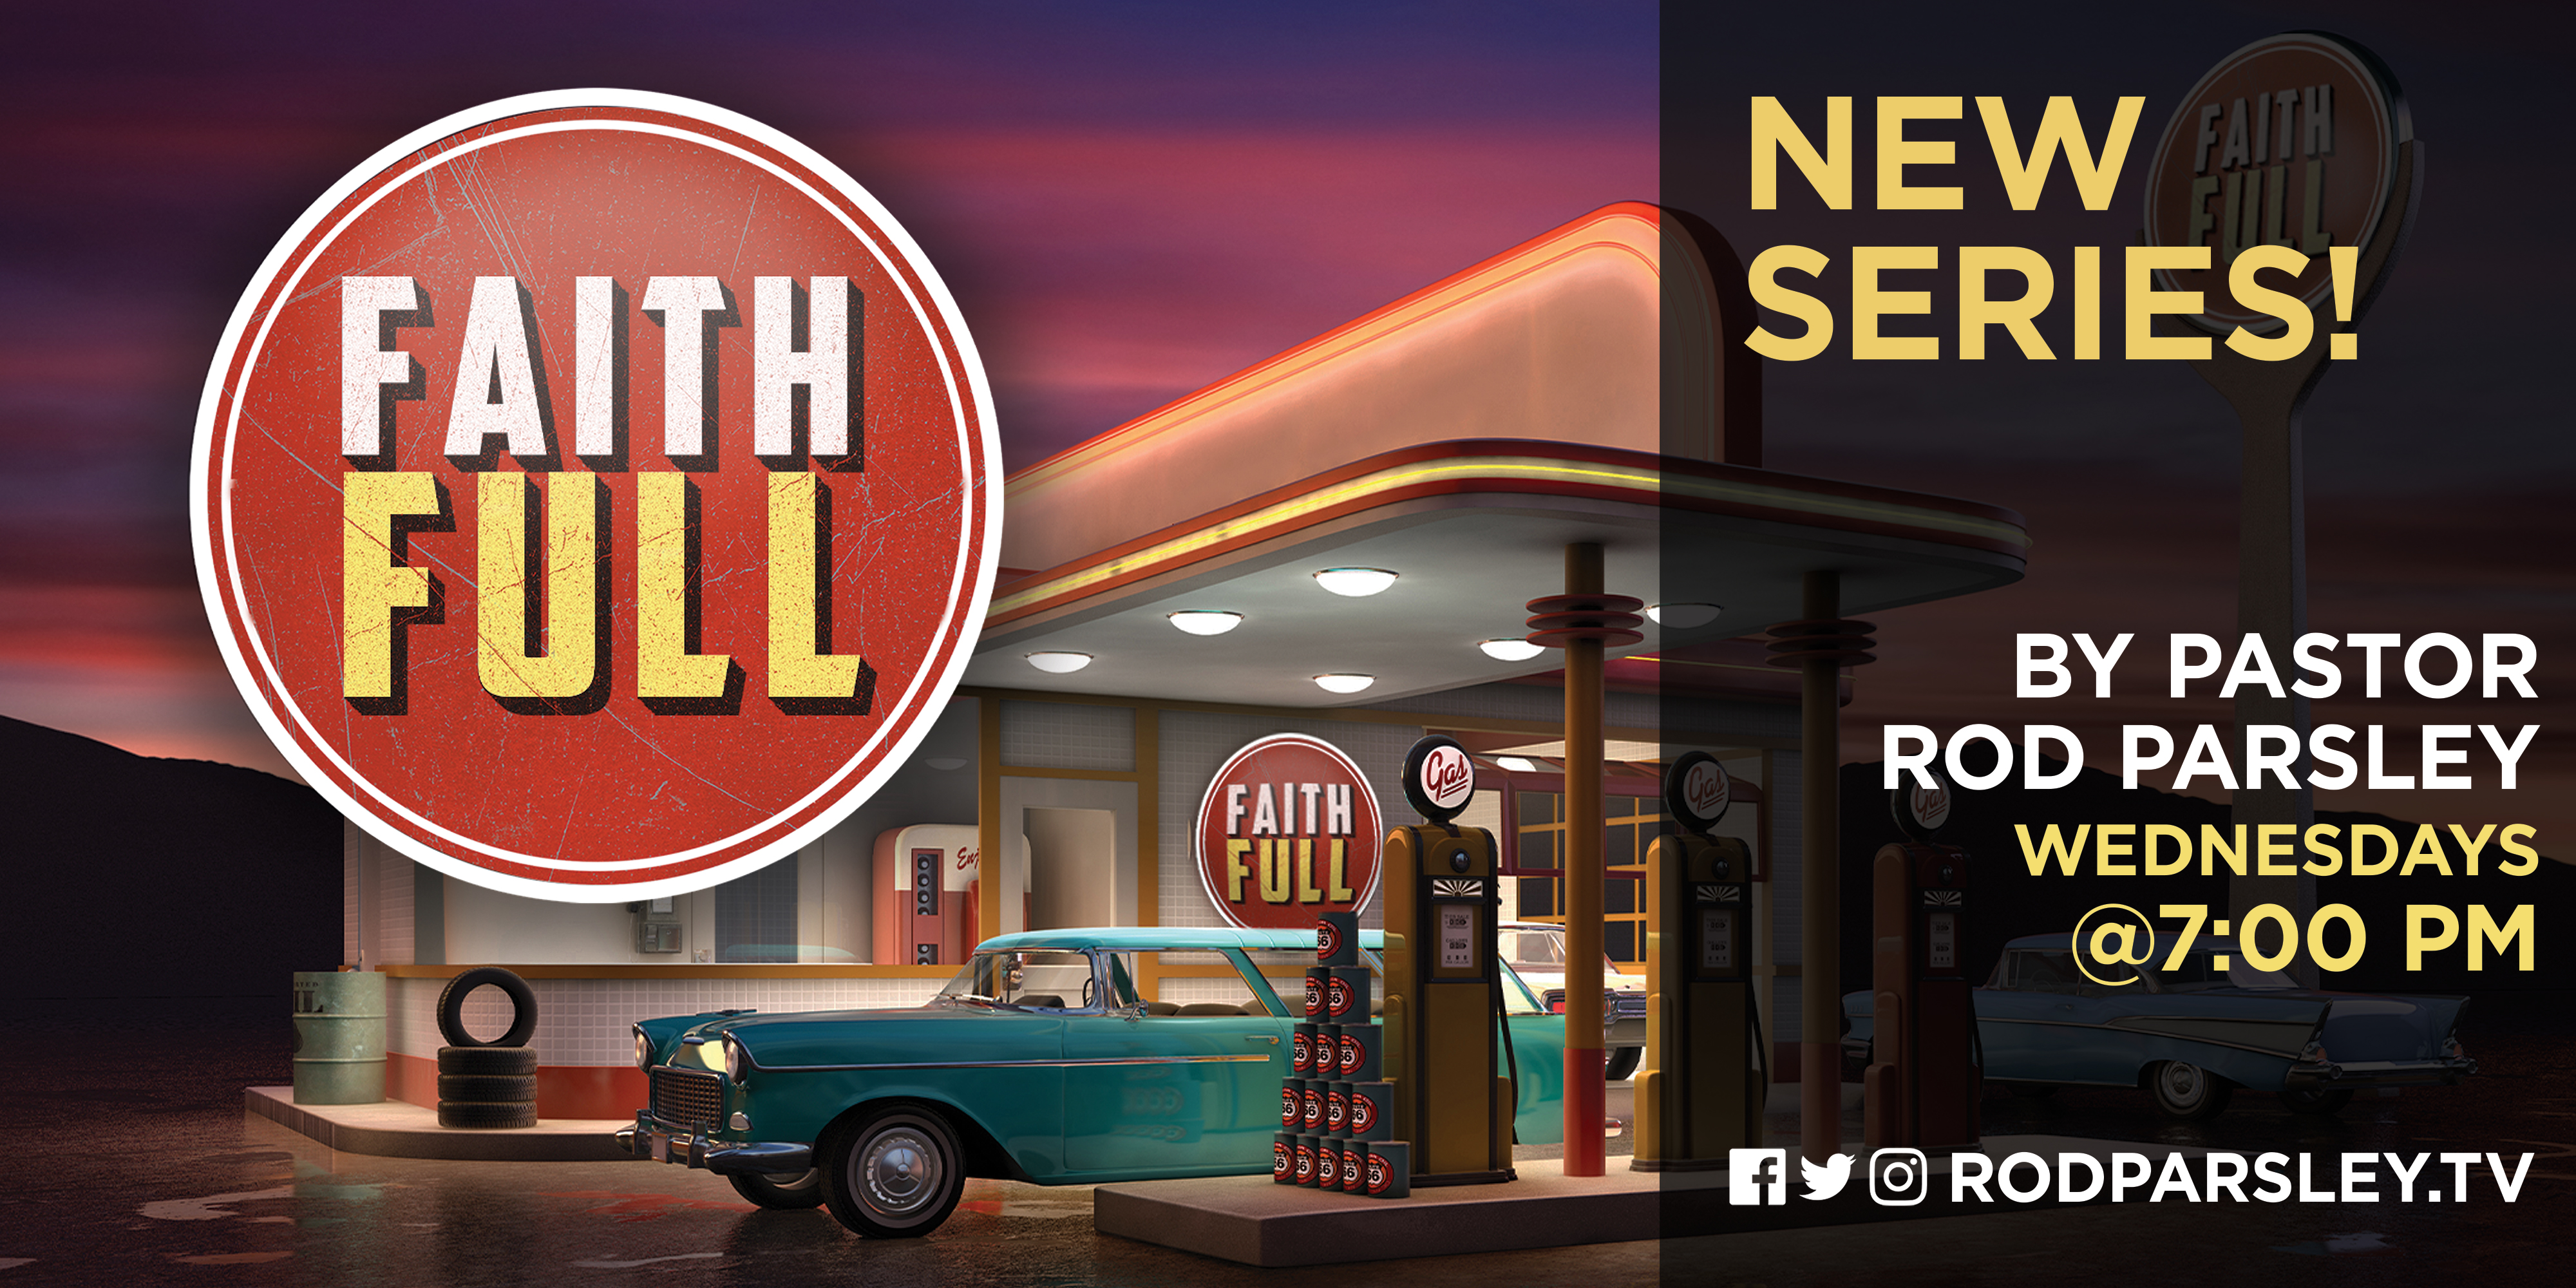 FaithFULL New Series By Pastor Rod Parsley Wednesdays @7:00 PM